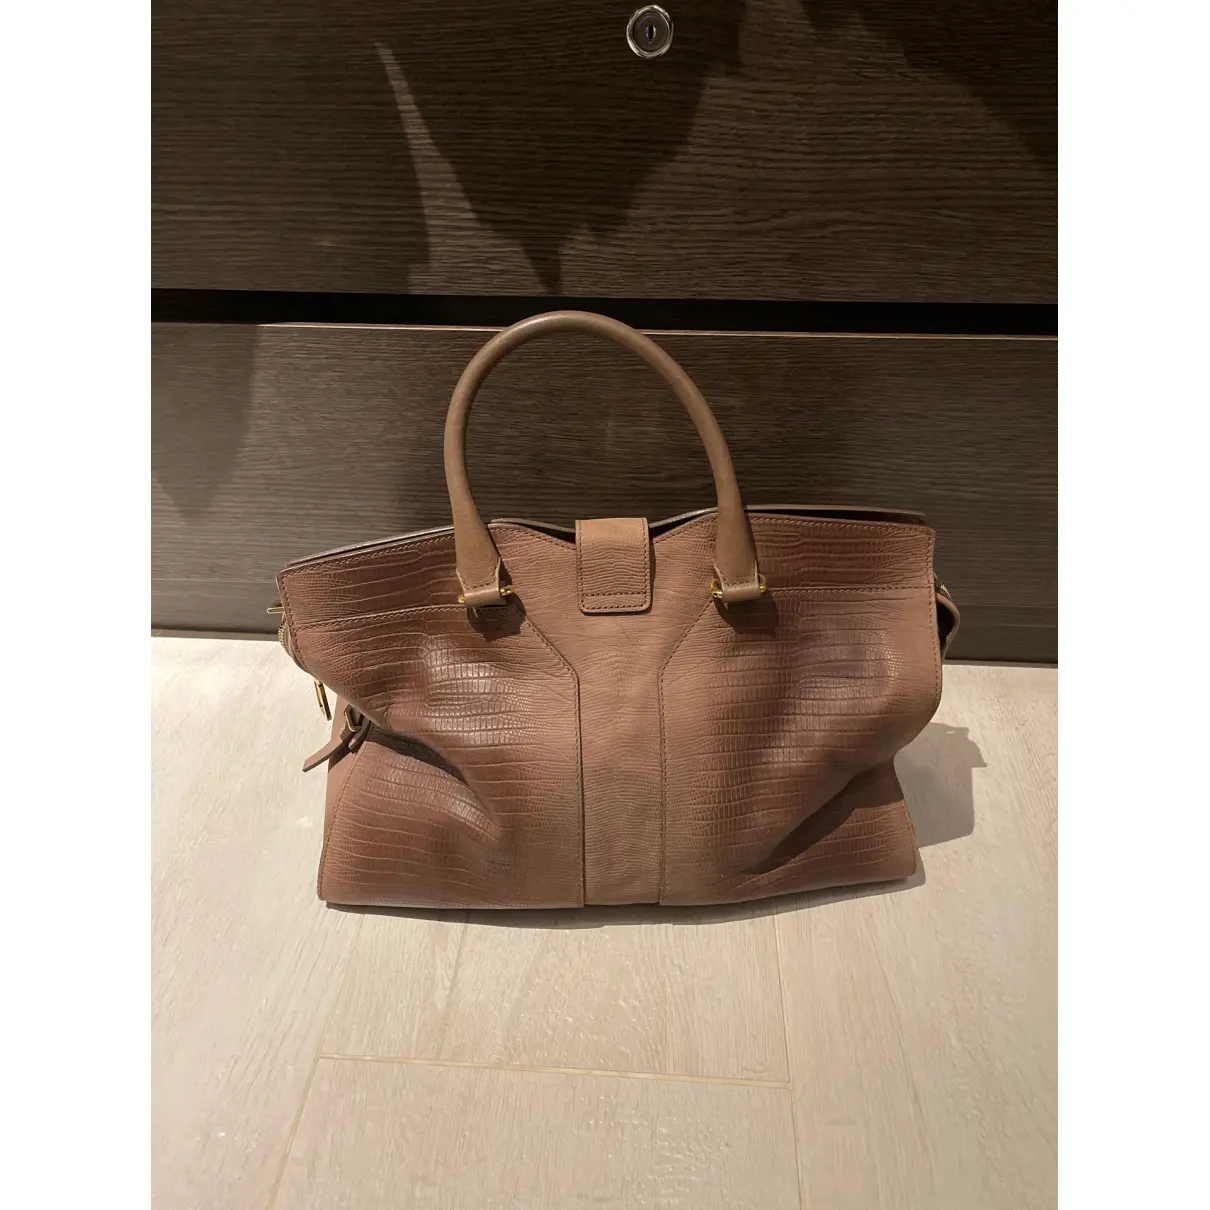 Buy Yves Saint Laurent Chyc leather handbag online